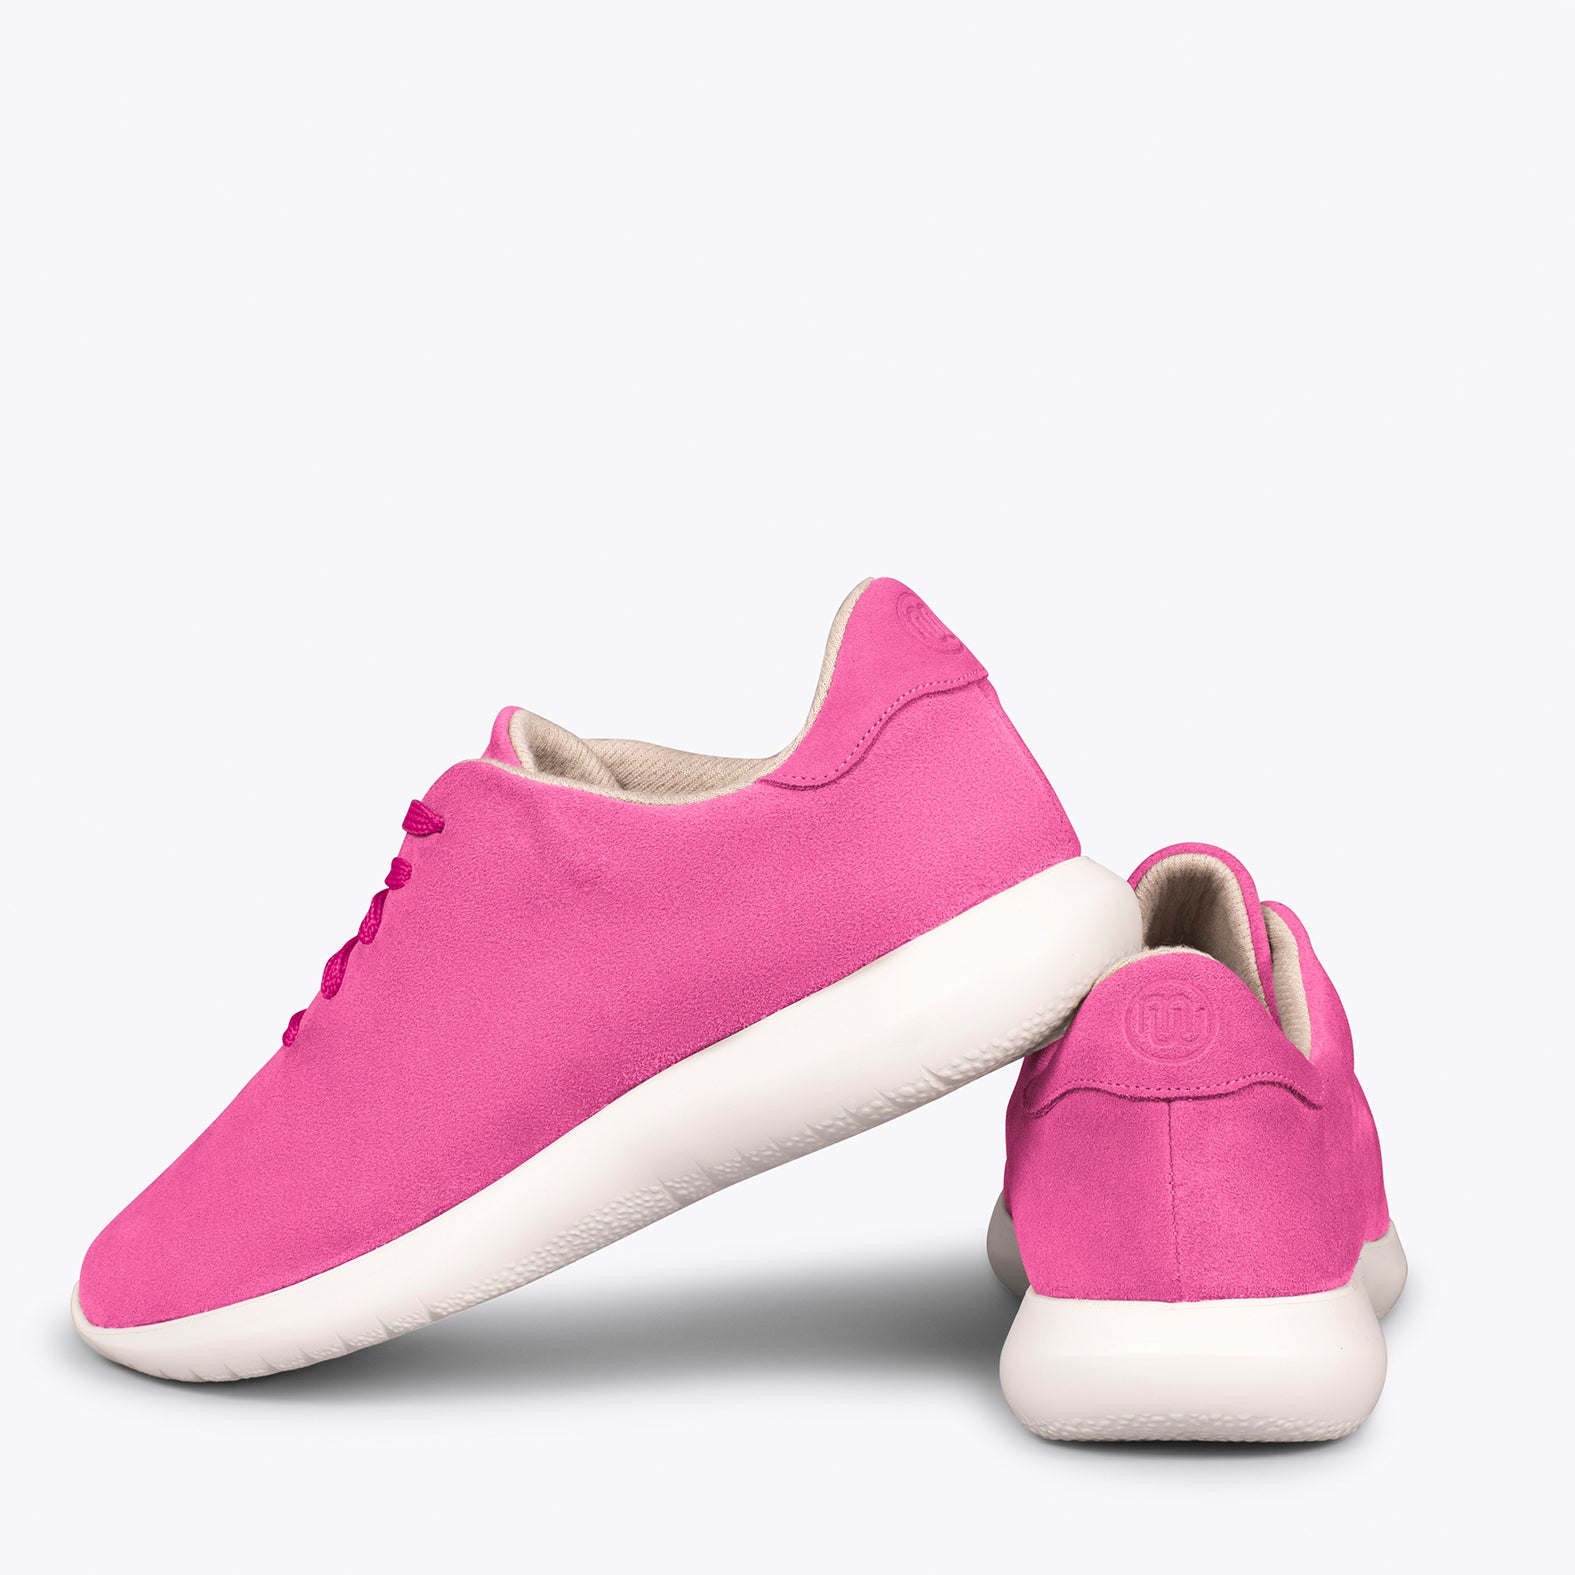 WALK – FUCHSIA comfortable women’s sneakers